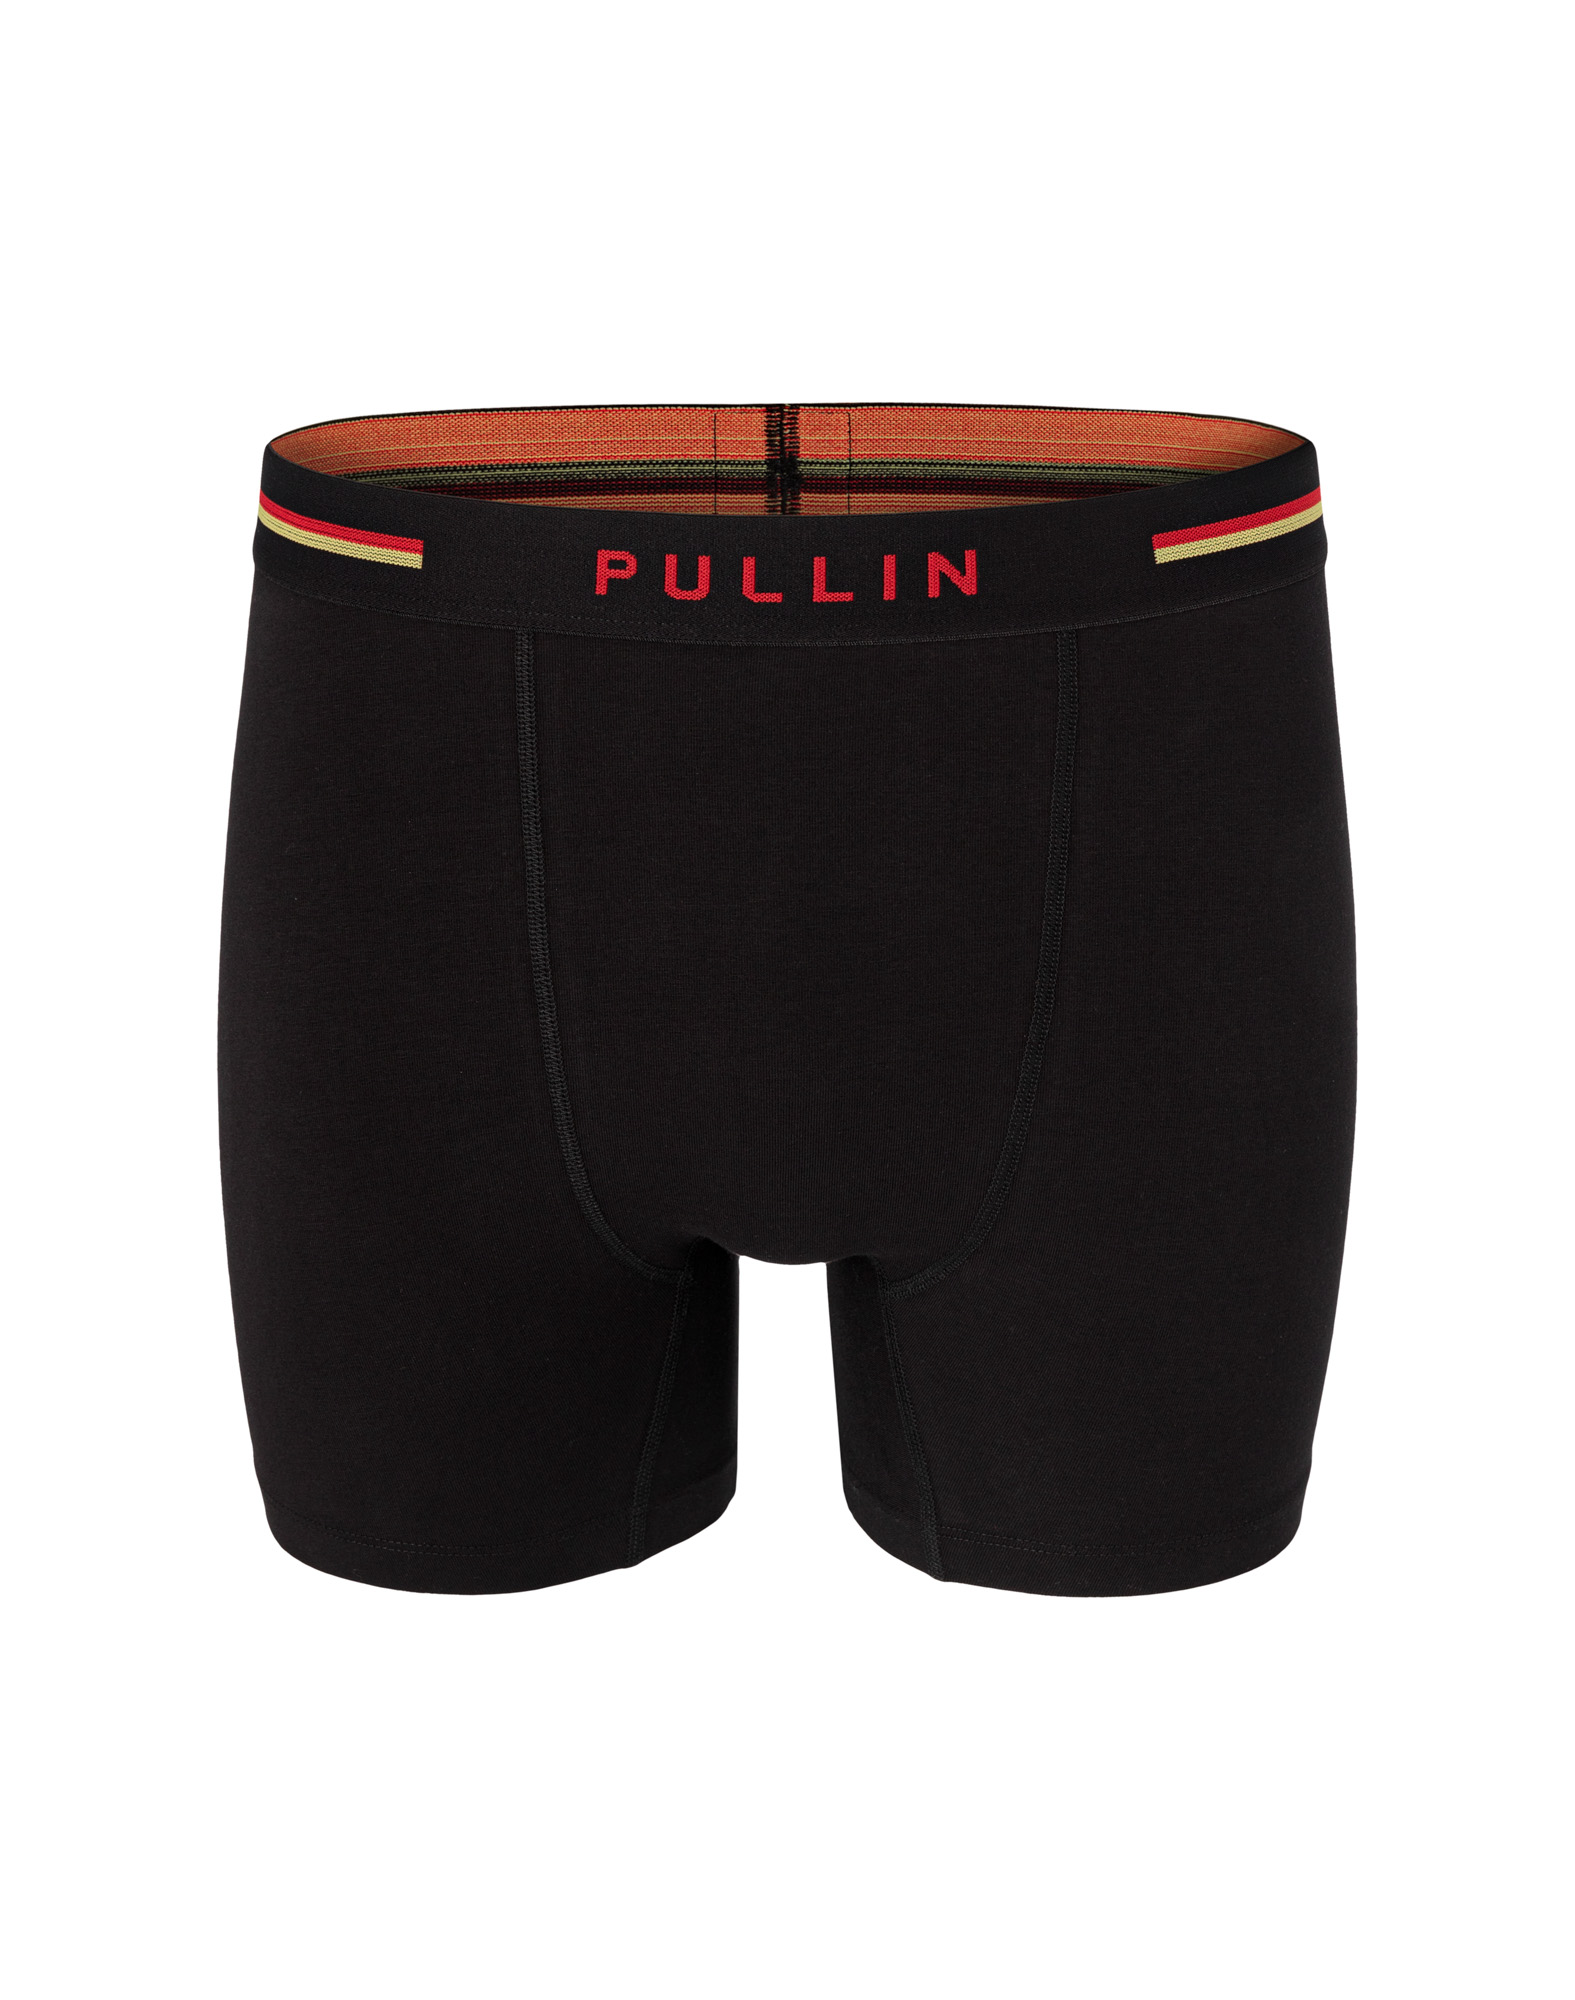 BLACK MEN'S TRUNK FASHION 2 COTON BLACKIV - Men's underwear PULLIN